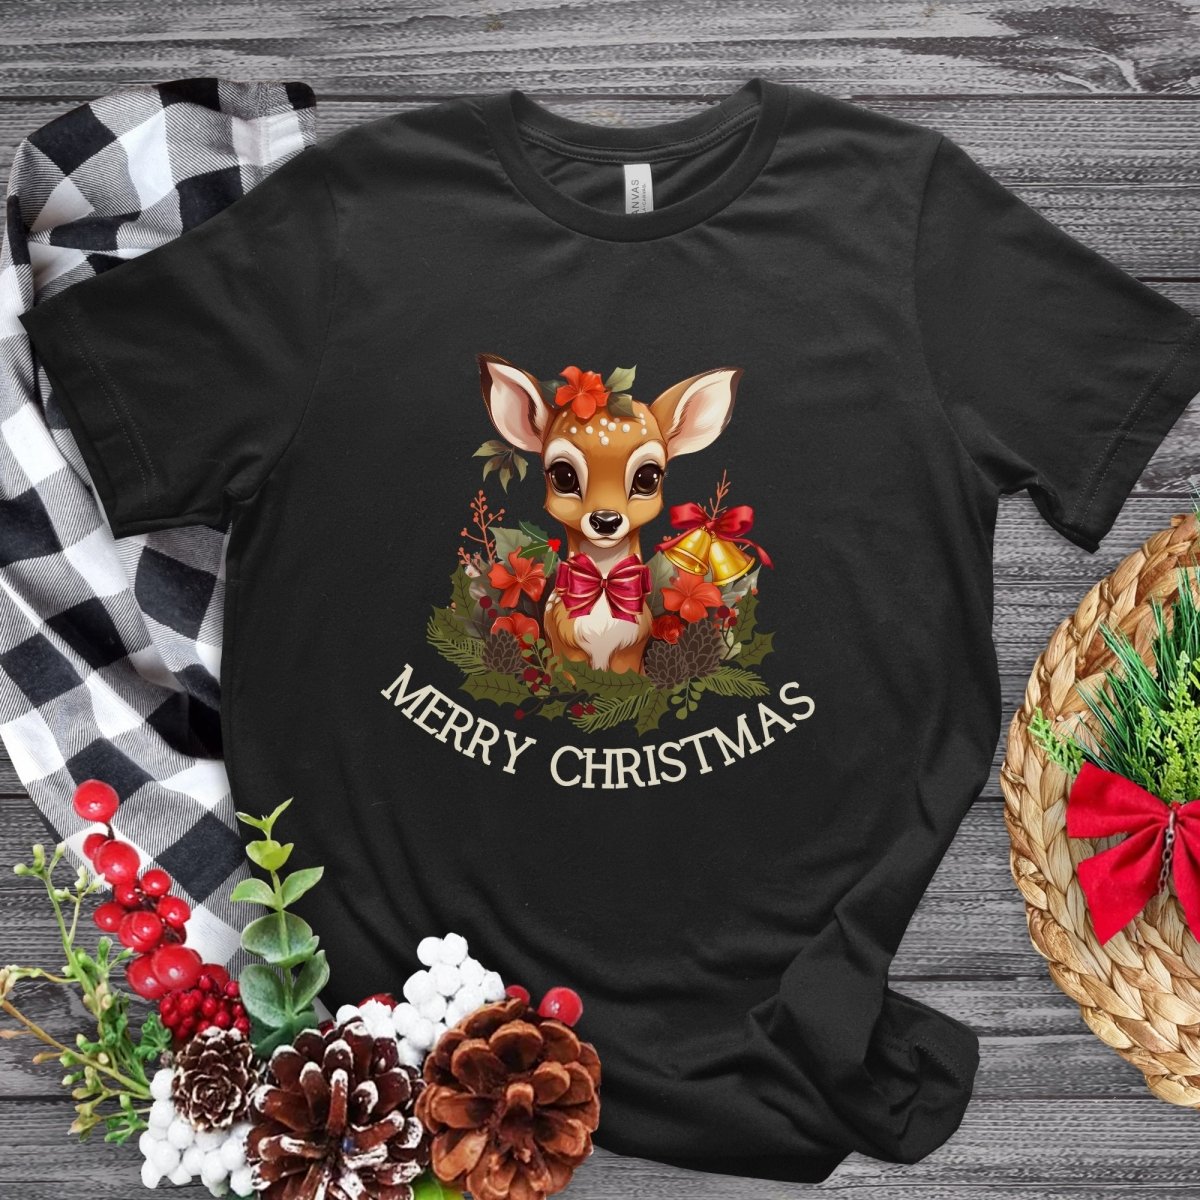 Christmas Deer T-Shirt - High Quality Festive Family Unisex T-Shirts, Gift for Deer Lovers, Cute Christmas Shirt, Reindeer Christmas Tee - Everything Pixel